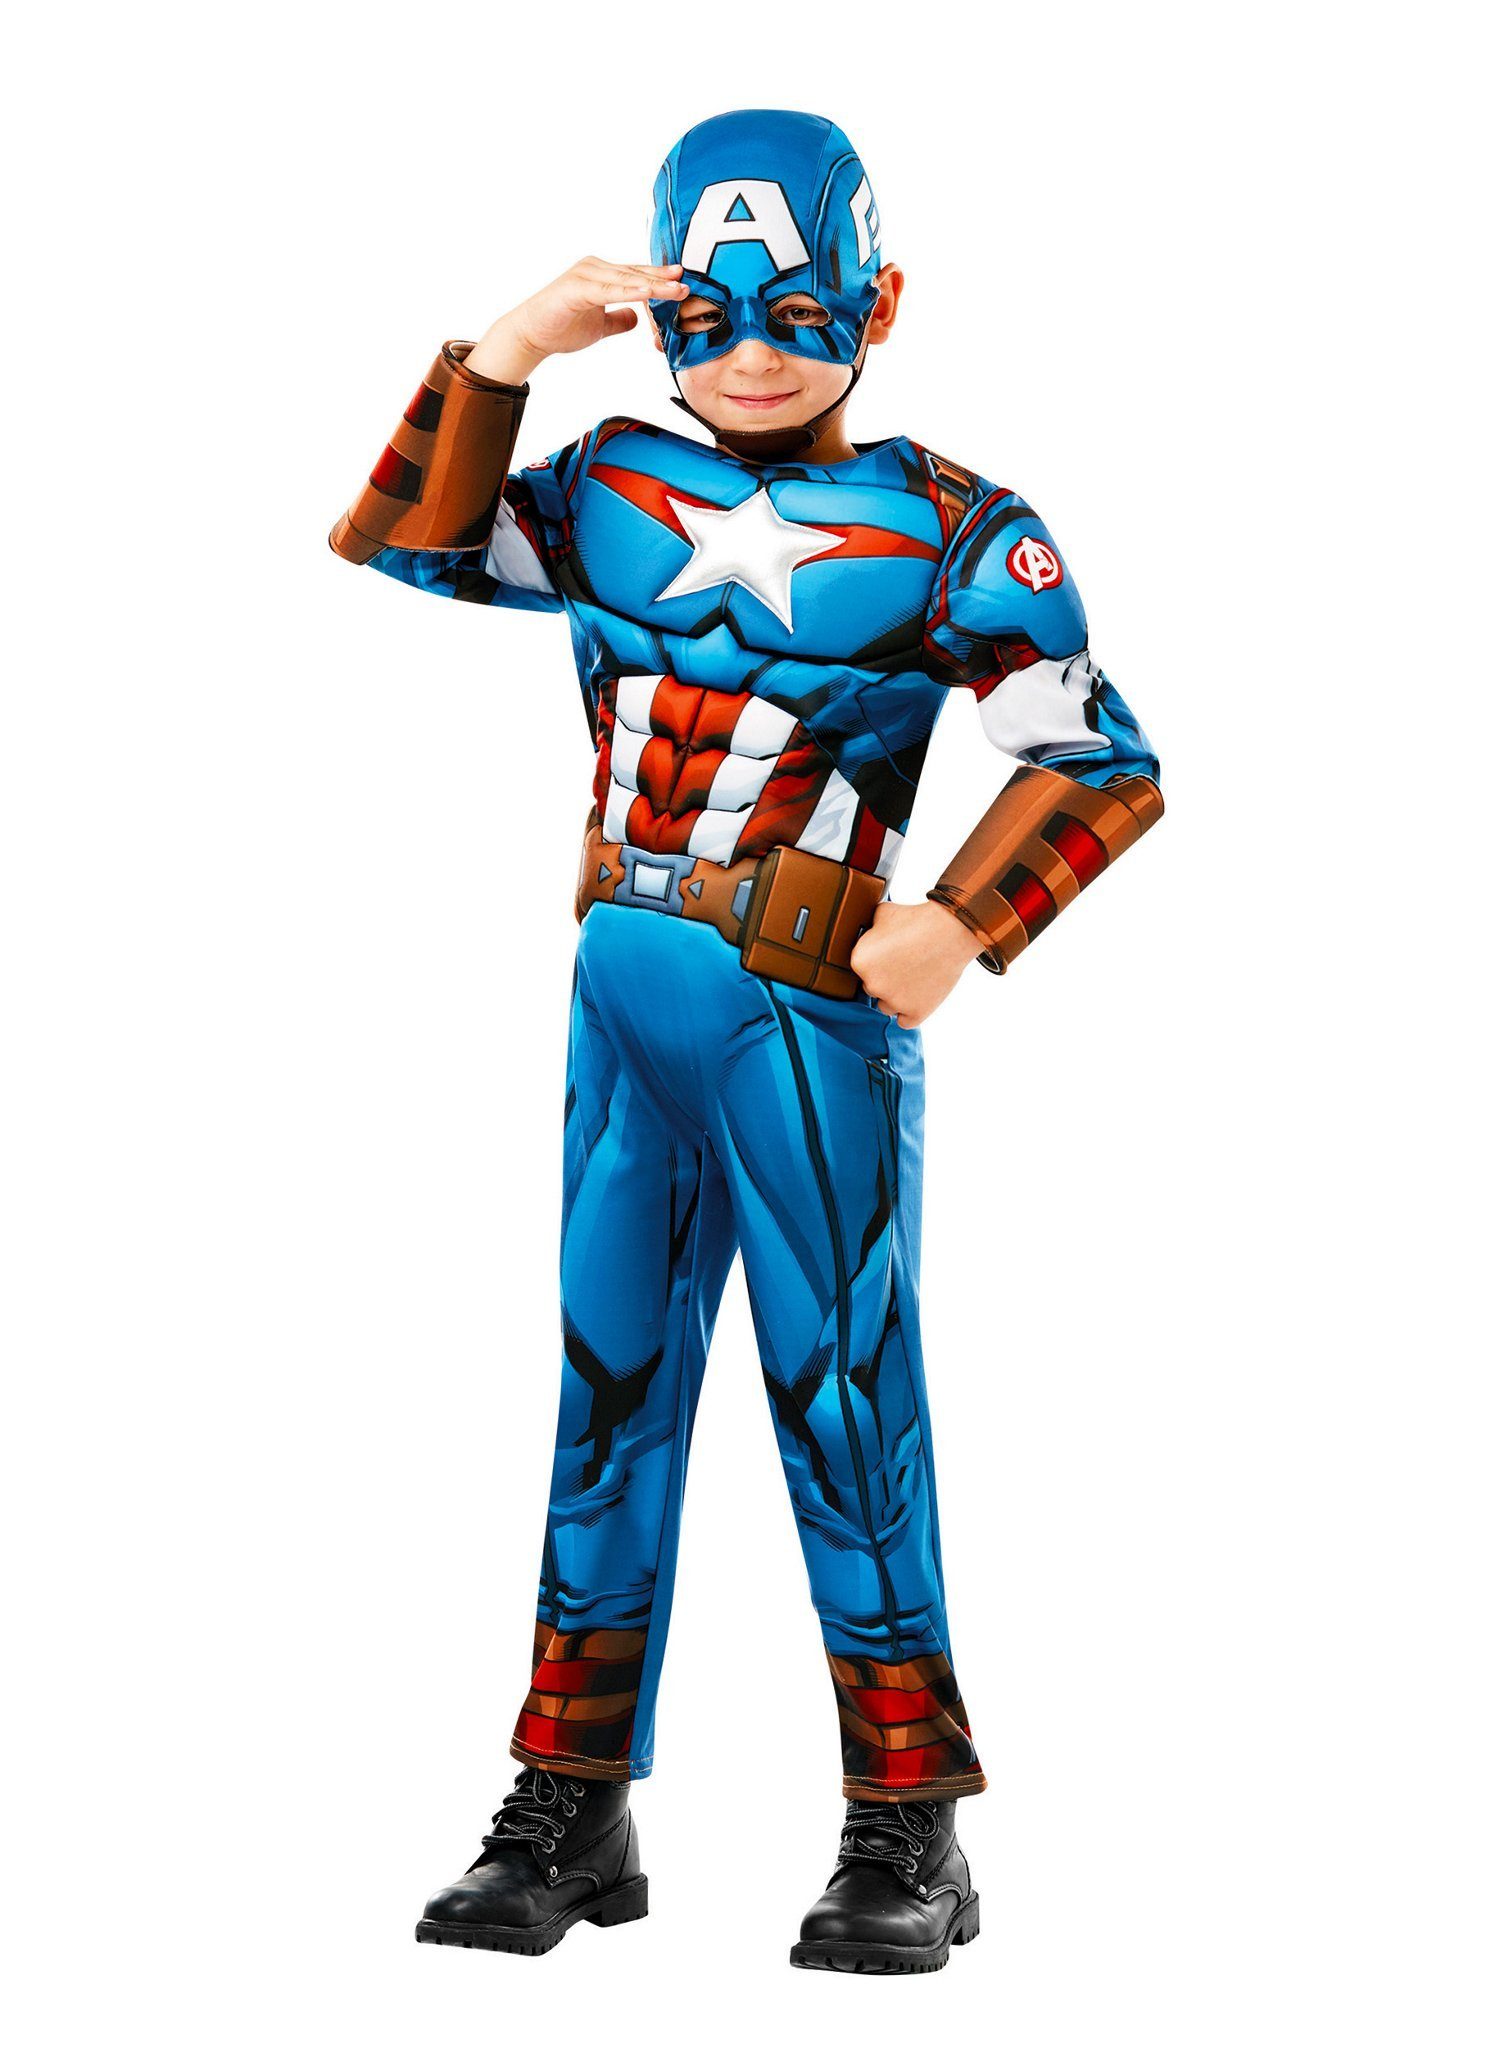 Rubie´s Kostüm Avengers Assemble Captain America, Superheldenkostüm zur Marvel-Animationsserie